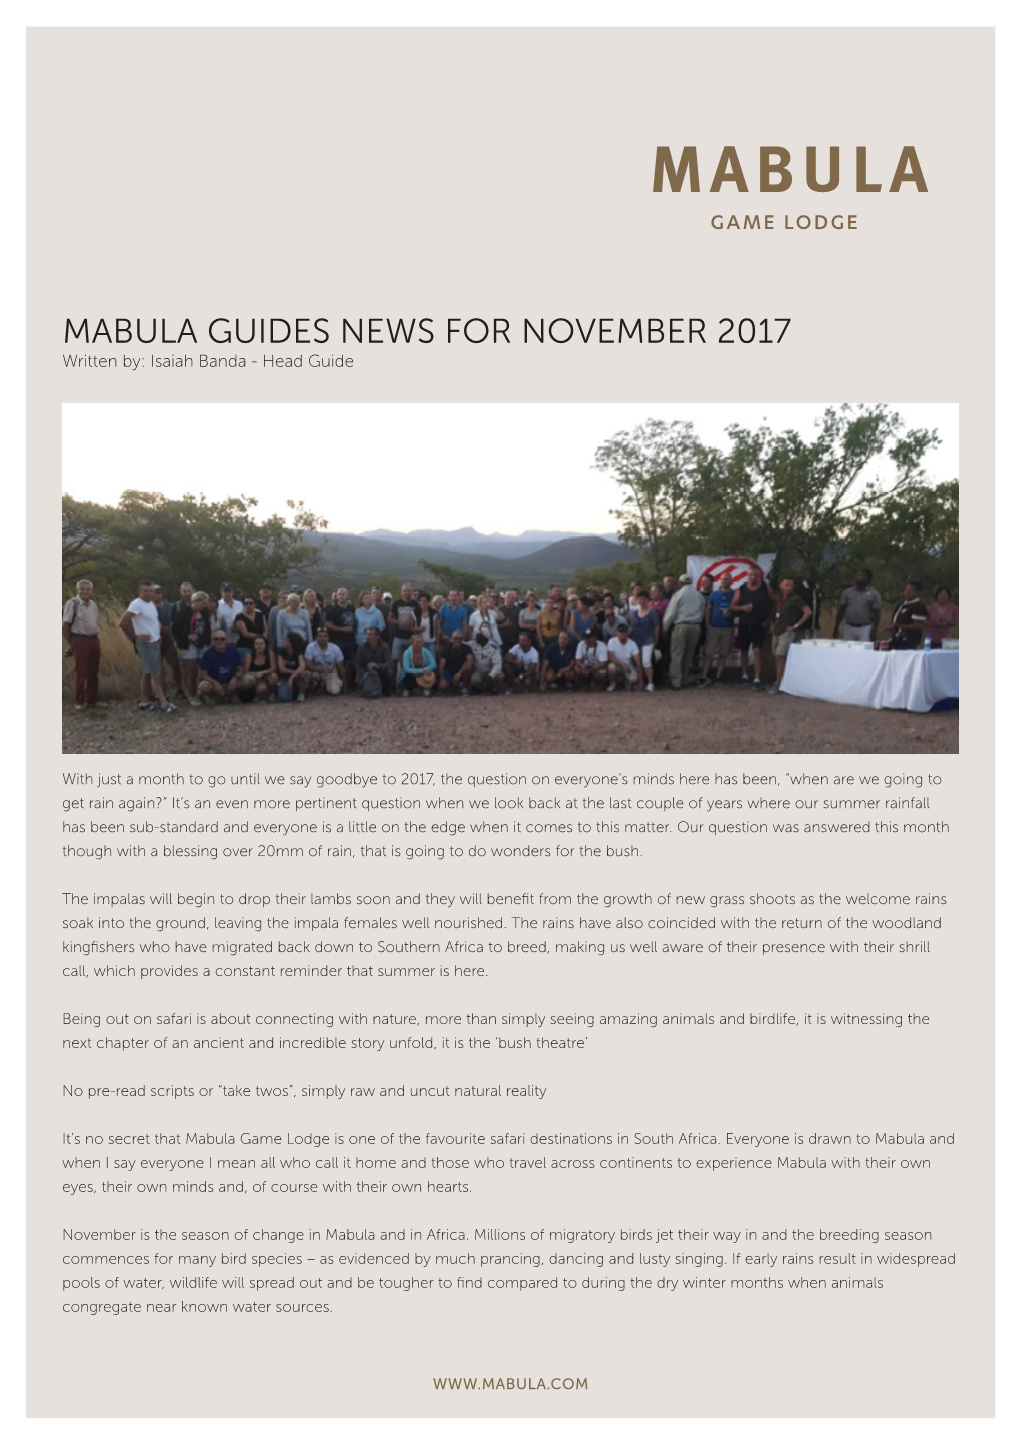 MABULA GUIDES NEWS for NOVEMBER 2017 Written By: Isaiah Banda - Head Guide